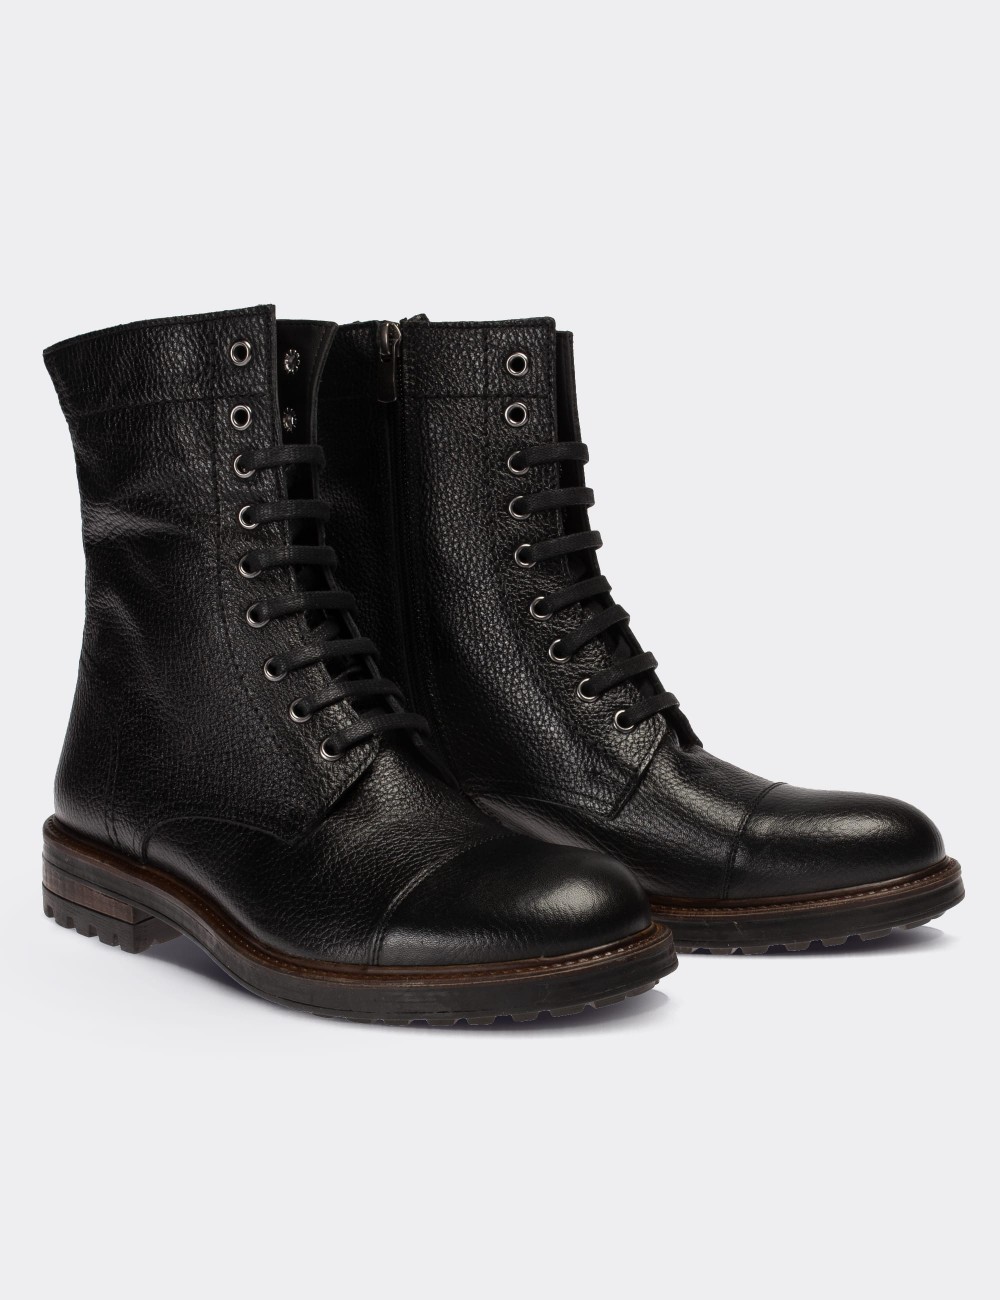 Black Leather Postal Boots - Deery